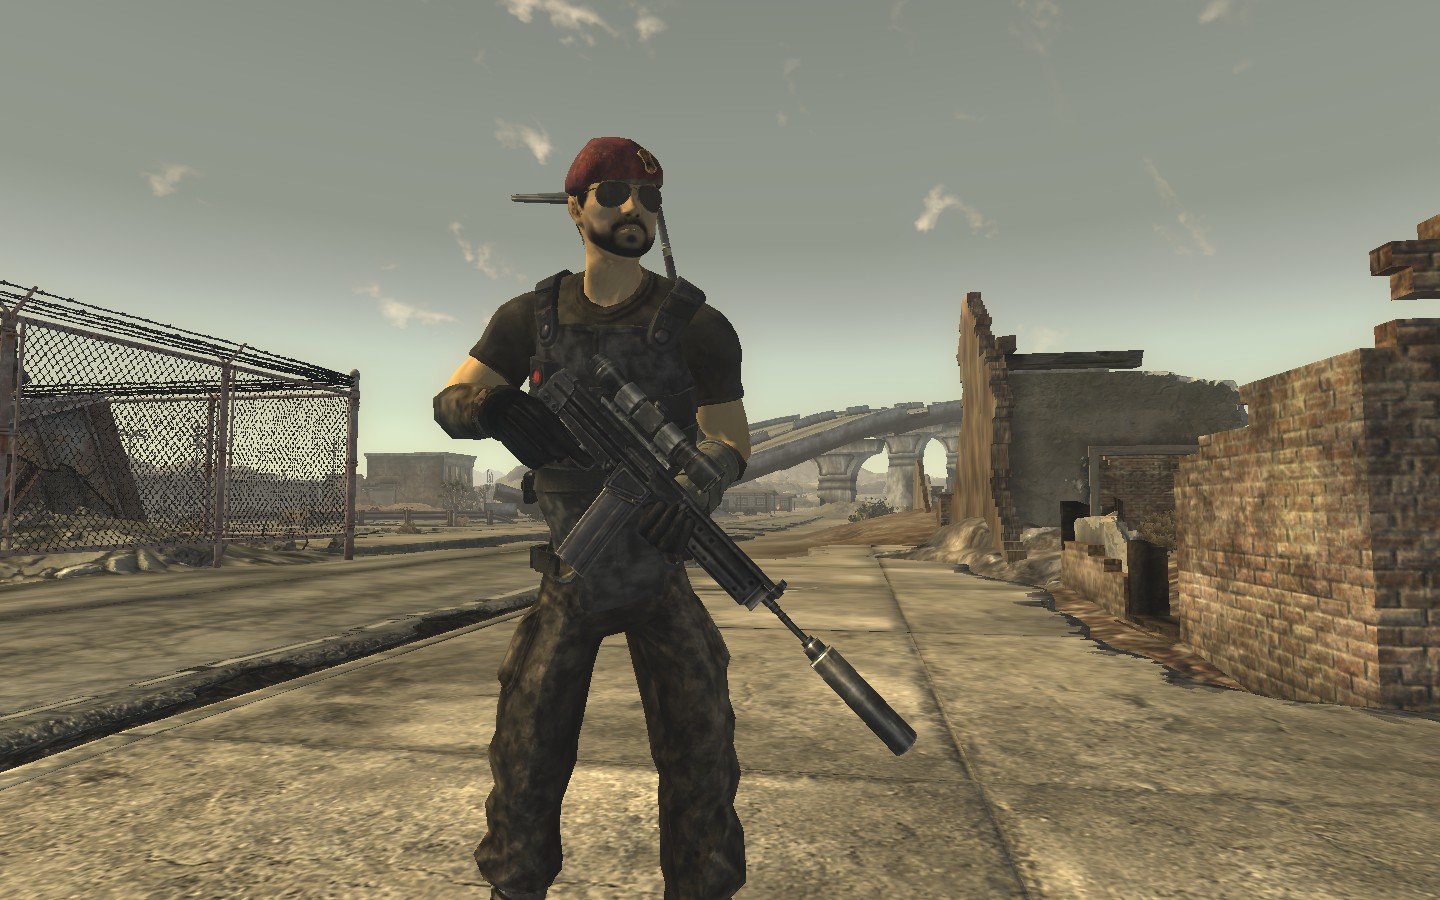 Fallout New Vegas Sniper Rifle Mod. New Vegas Mod the Pitt. Mod games. Как забрать оружие на сталелитейном заводе фоллаут 3. Working games mod